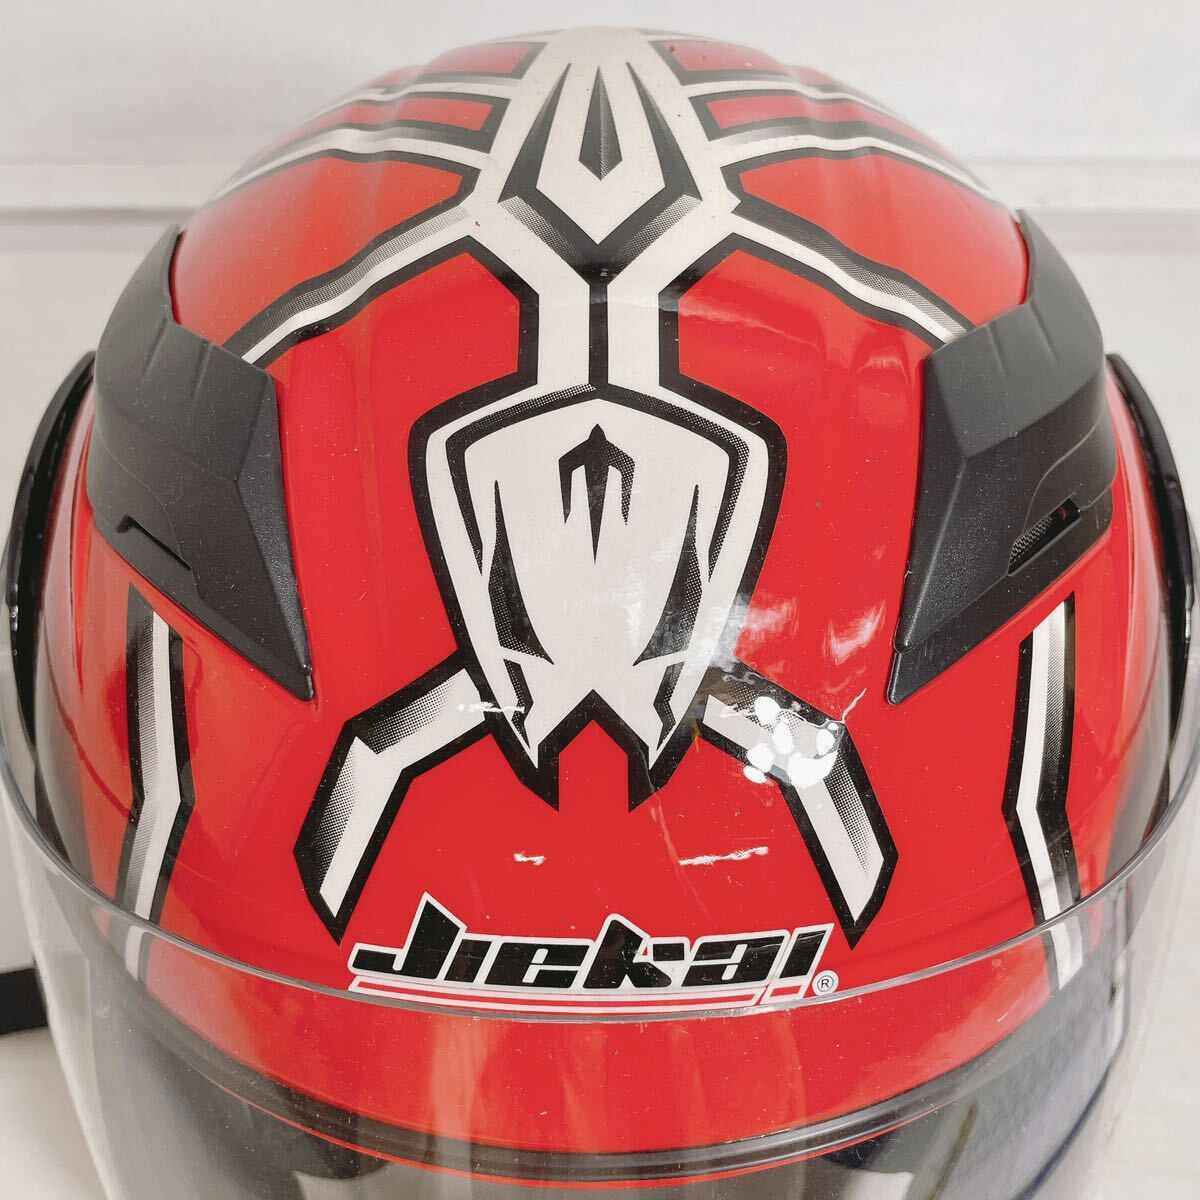 ◆Jiekai フルフェイスヘルメット JK-902 システムヘルメット ジェットヘルメット XXL size63〜64◆M3-K_画像3